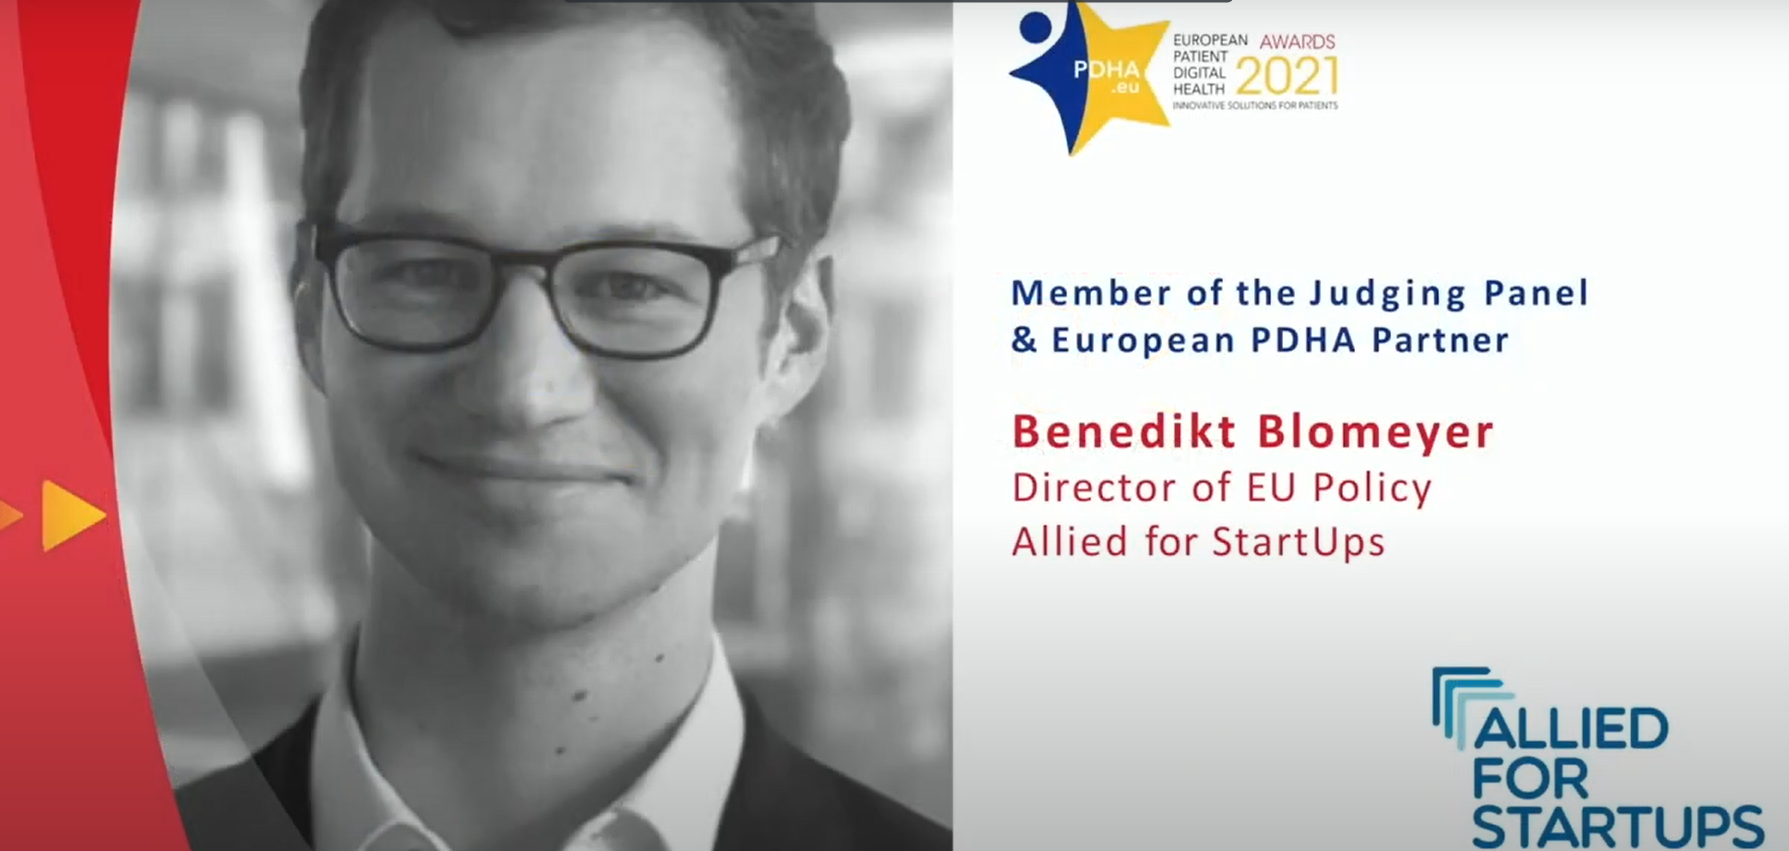 EUPDHA21 - Benedikt Blomeyer, Director of EU Policy Allied for Startups